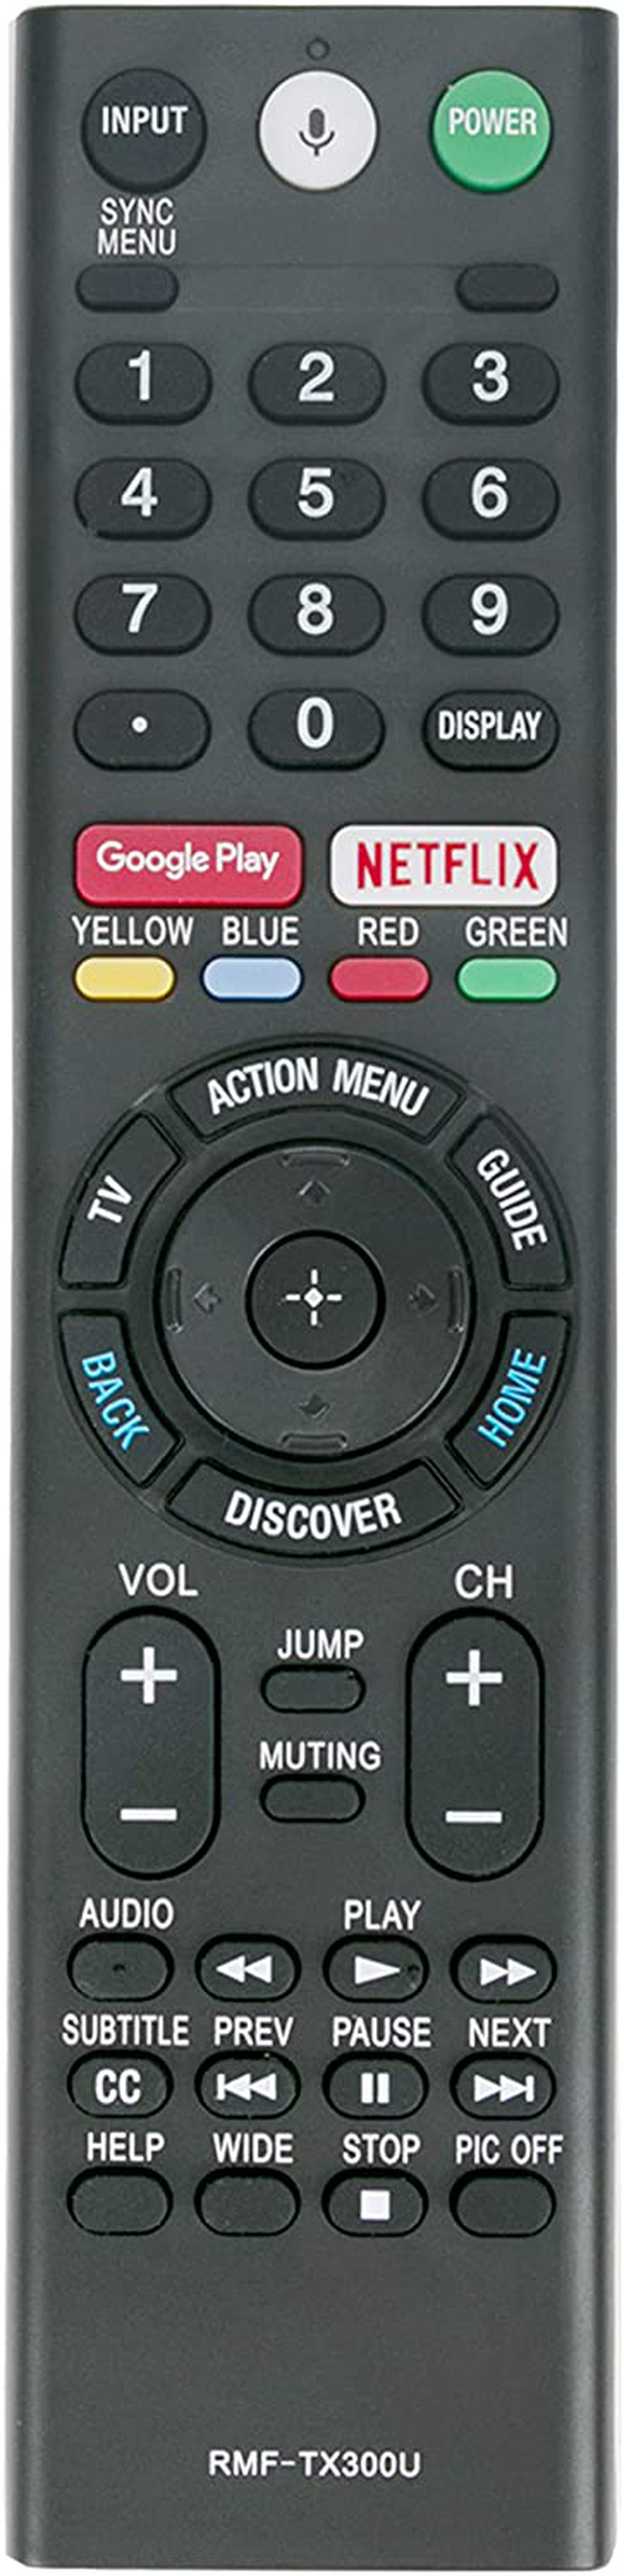 RMF-TX300U Replace Remote Sub RMF-TX200U RMF-TX201U Voice Control fit for Sony Smart 4K TV 149331811 XBR-55X850S XBR-55X930D XBR-65X850D XBR-65X930D XBR-75X850D XBR-75X940D XBR-85X850D